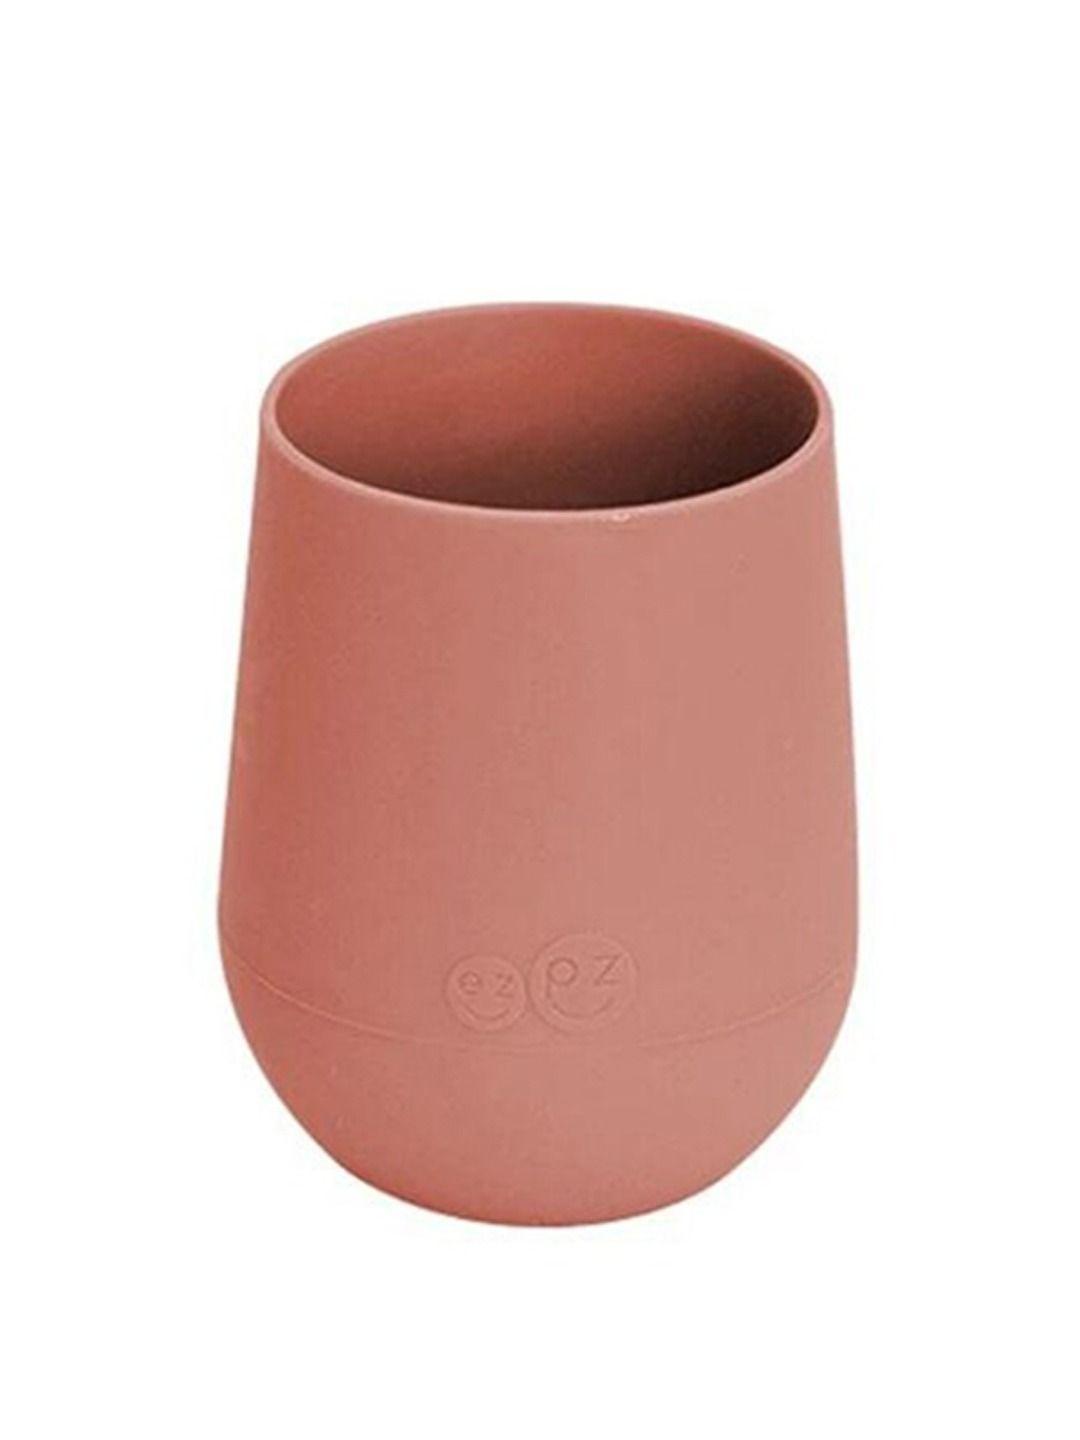 ezpz brown mini cup